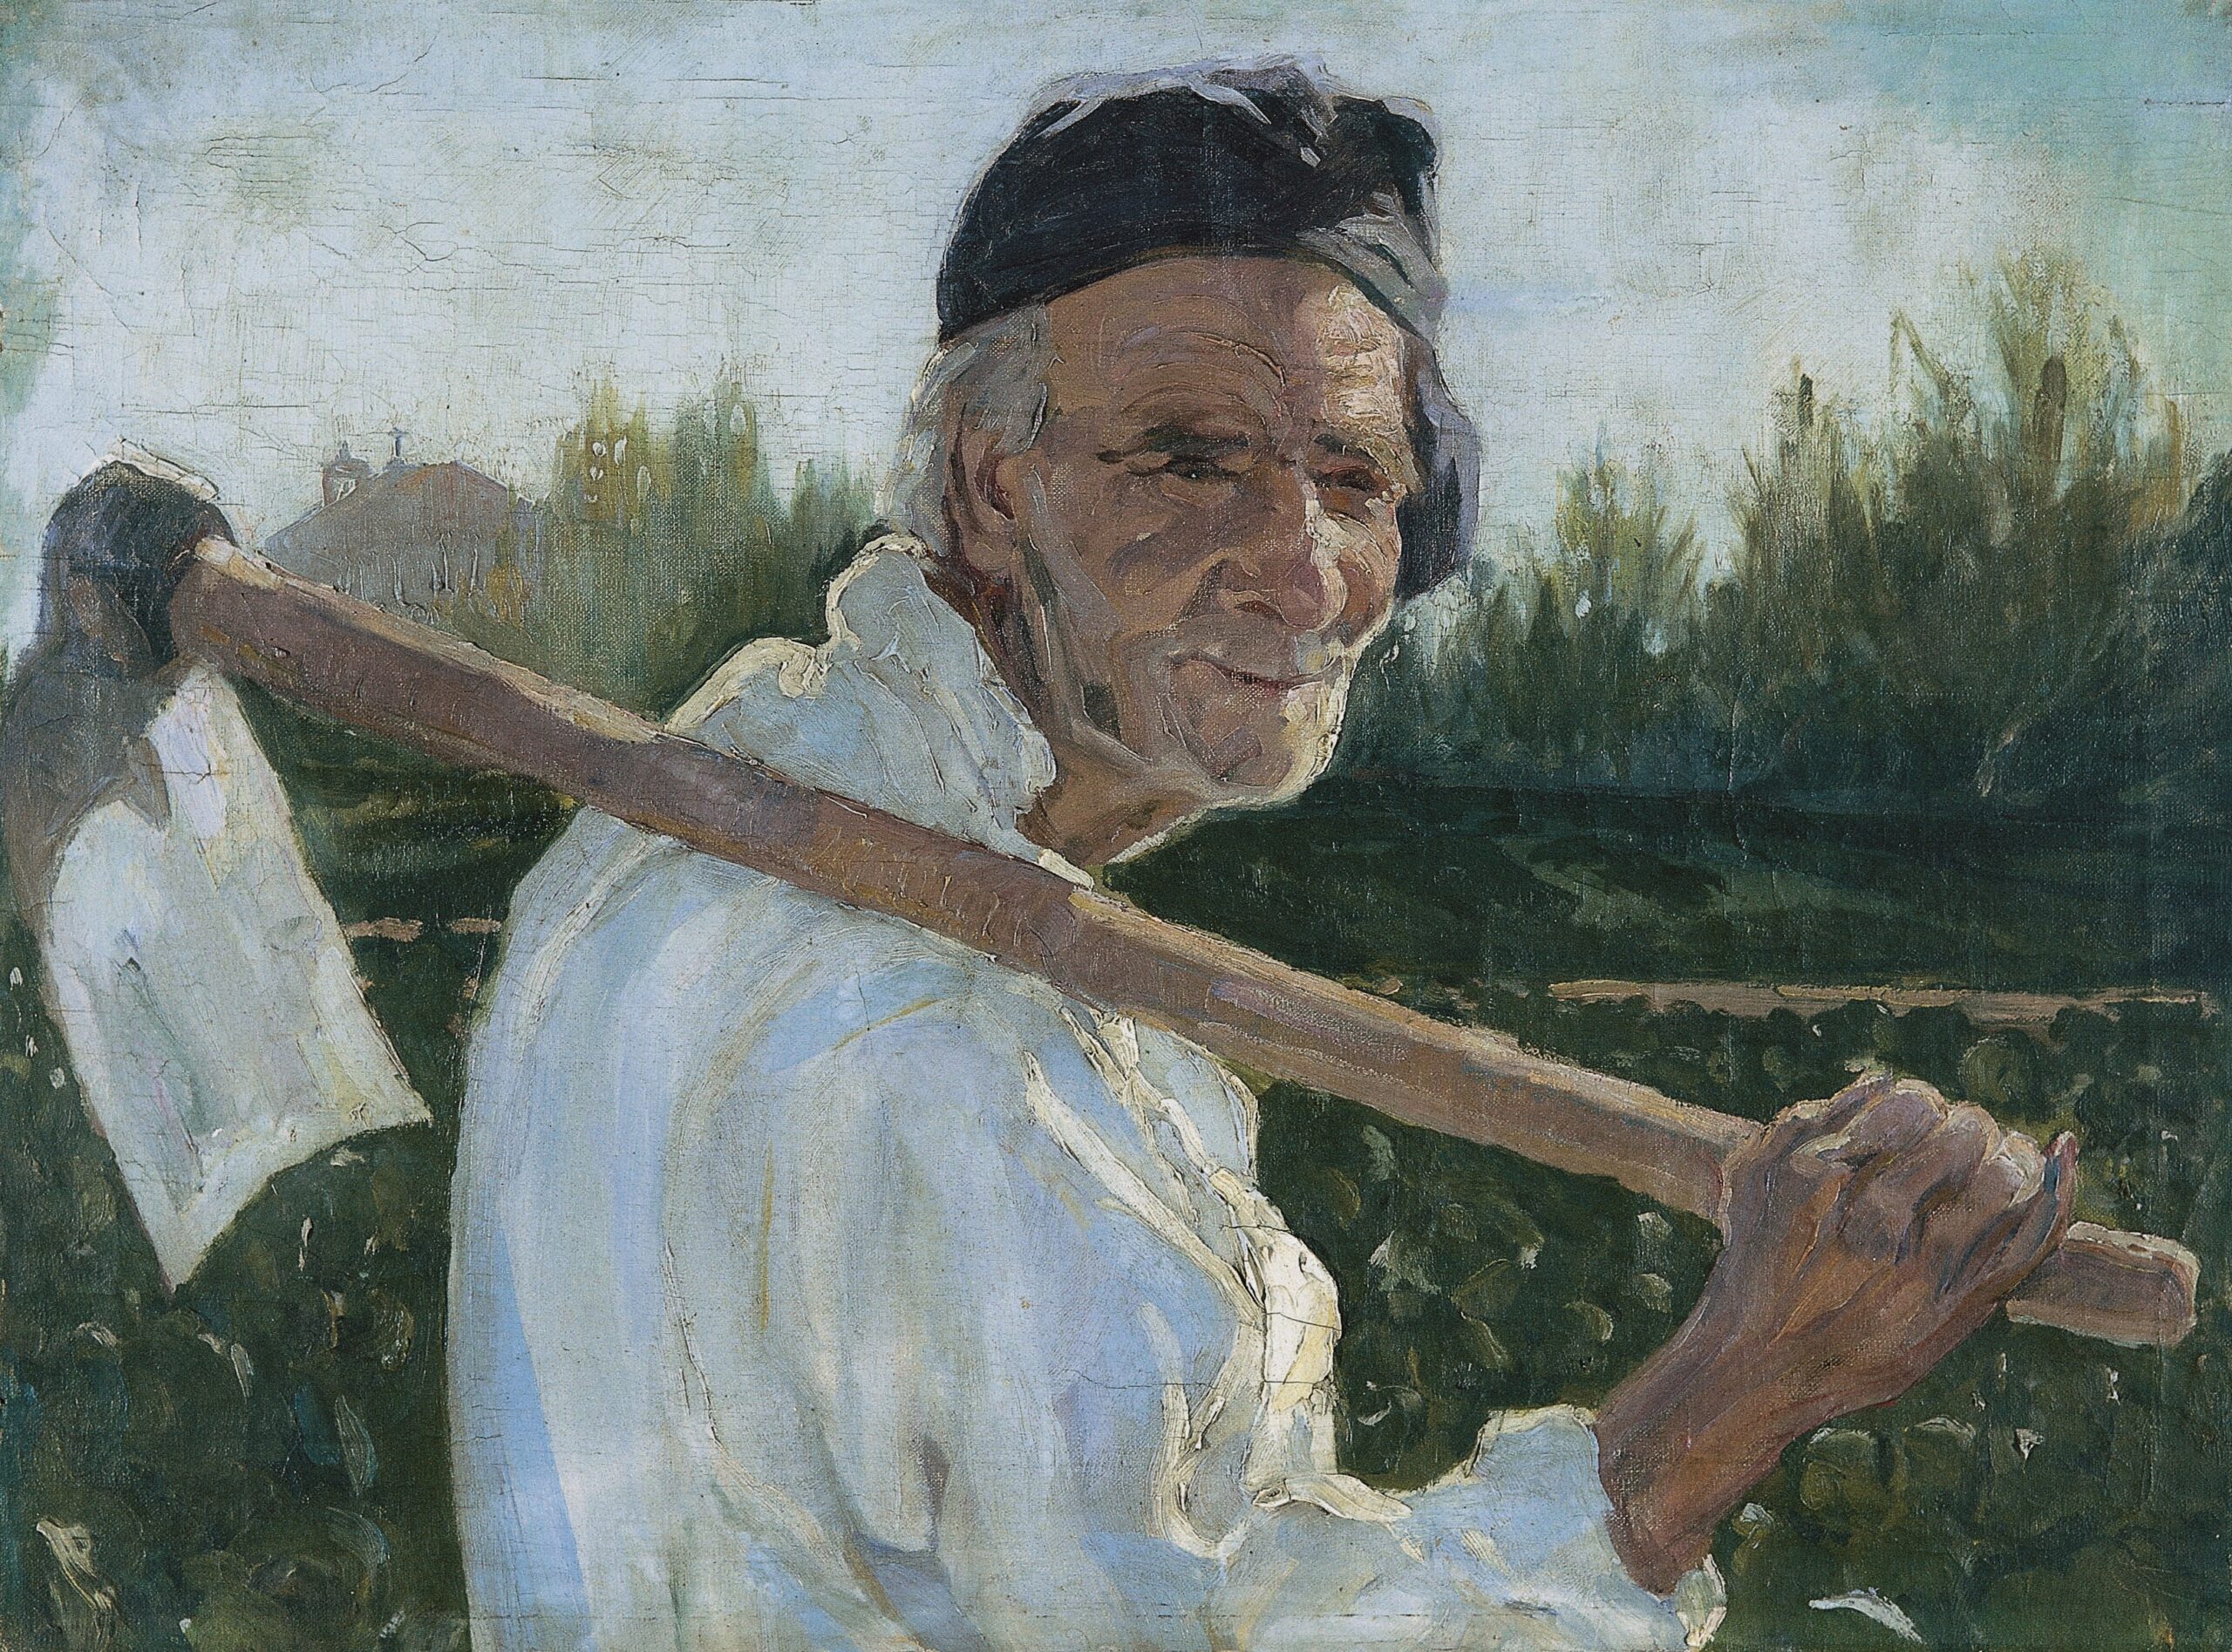 Pintura de José Manaut titulada Viejo labrador, Valencia, 1918. Óleo sobre lienzo.